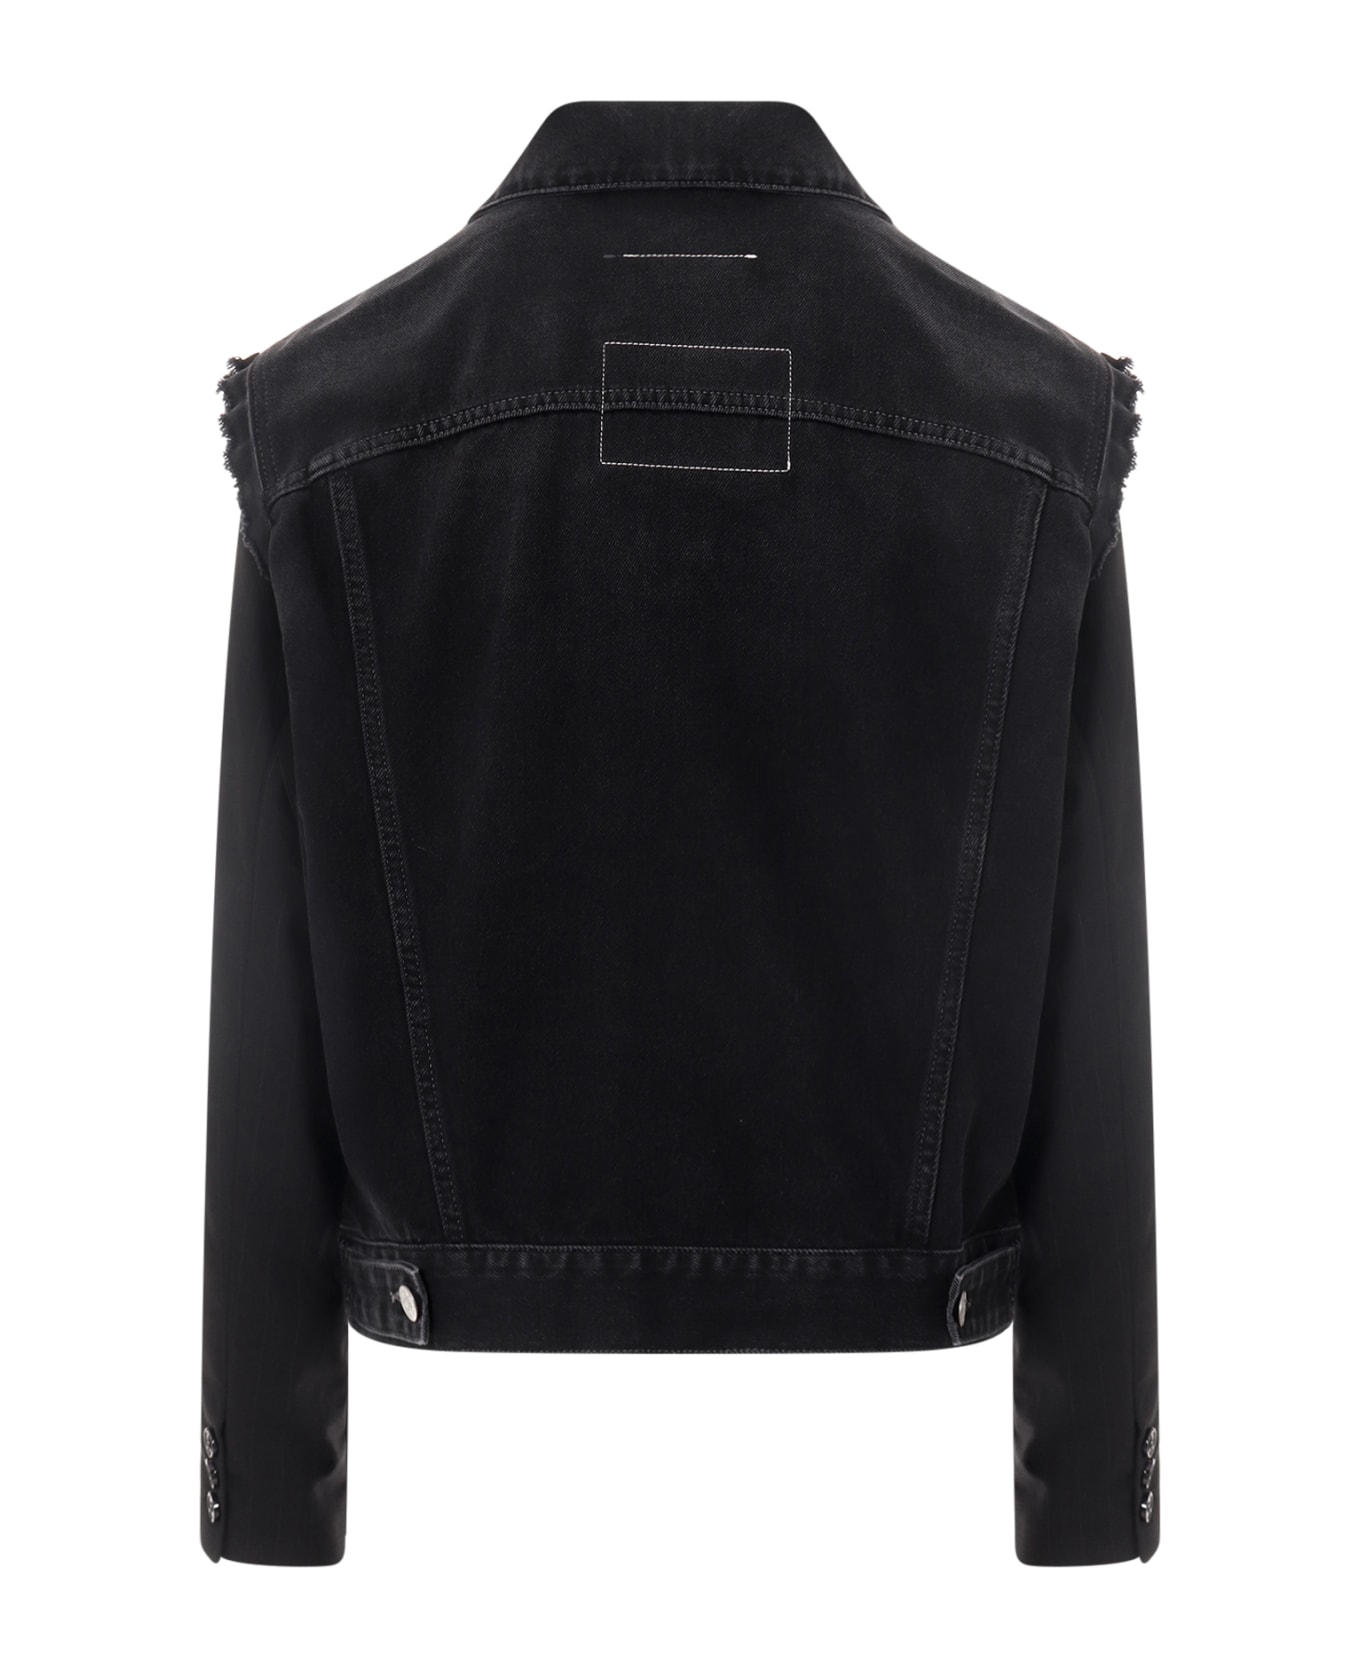 MM6 Maison Margiela Denim Striped Wool Sleeve Jacket - Black